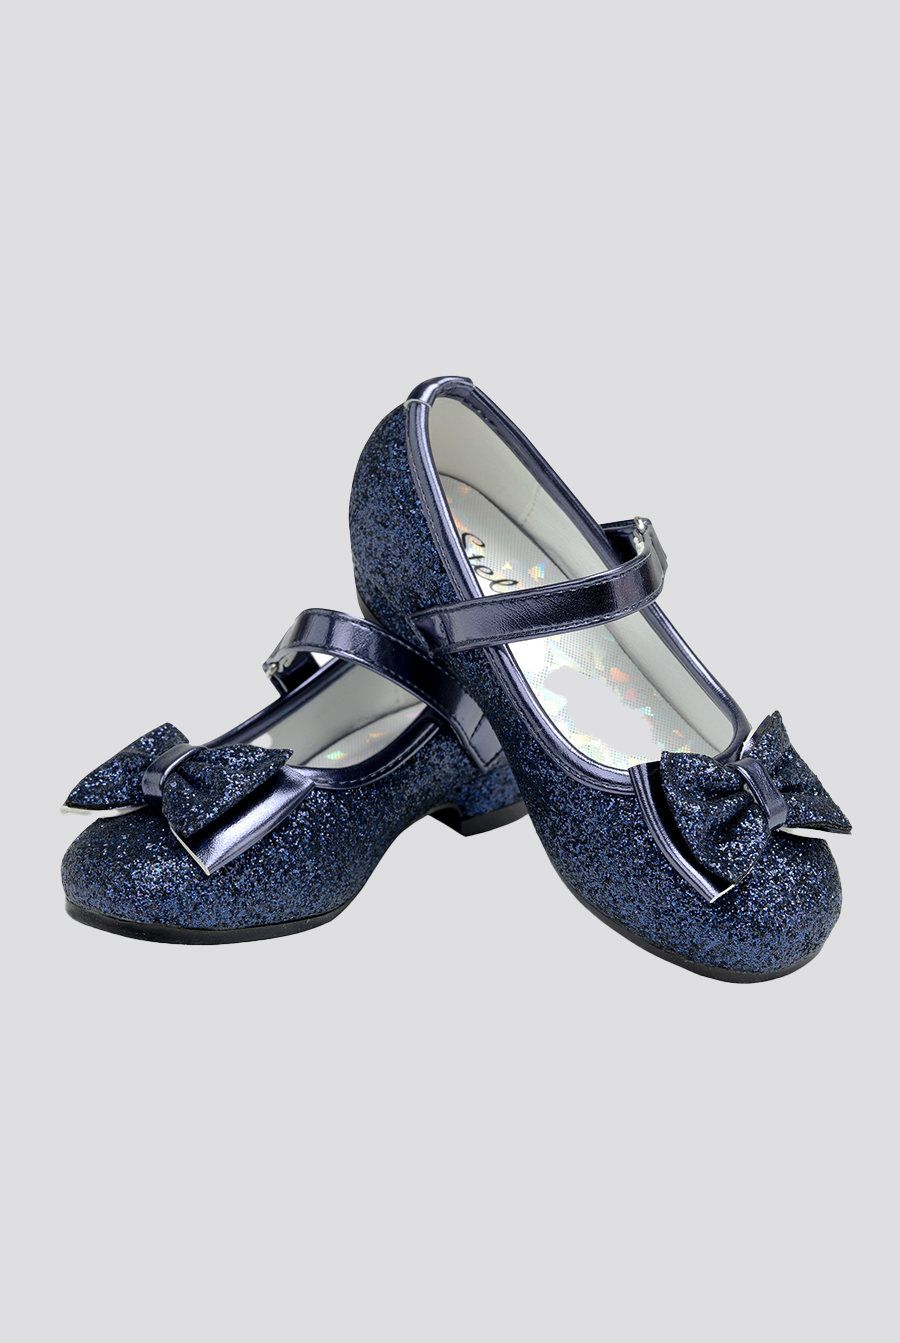 Girls Glitter Mary Jane Low Heel Shoes